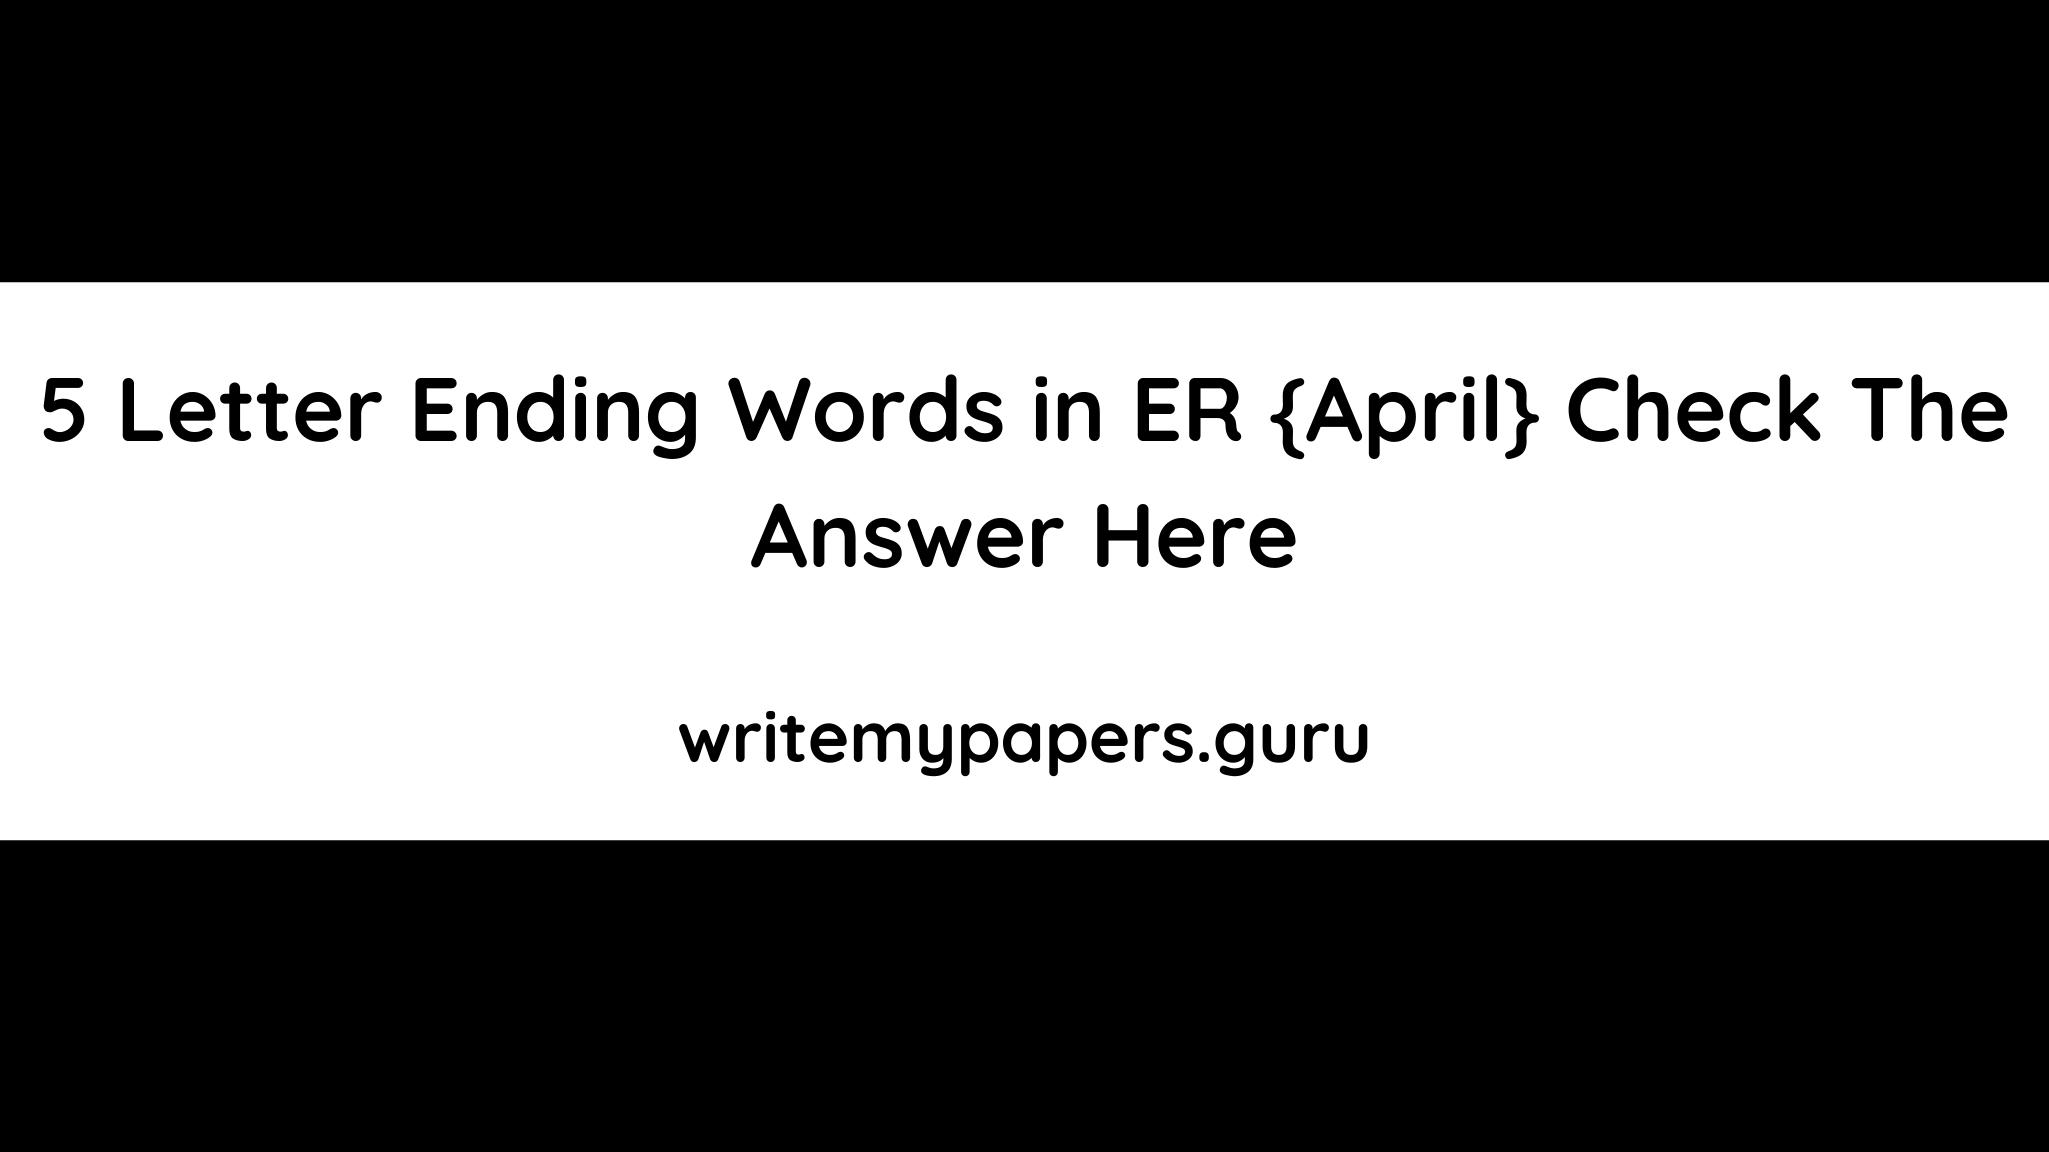 5 Letter Ending Words in ER